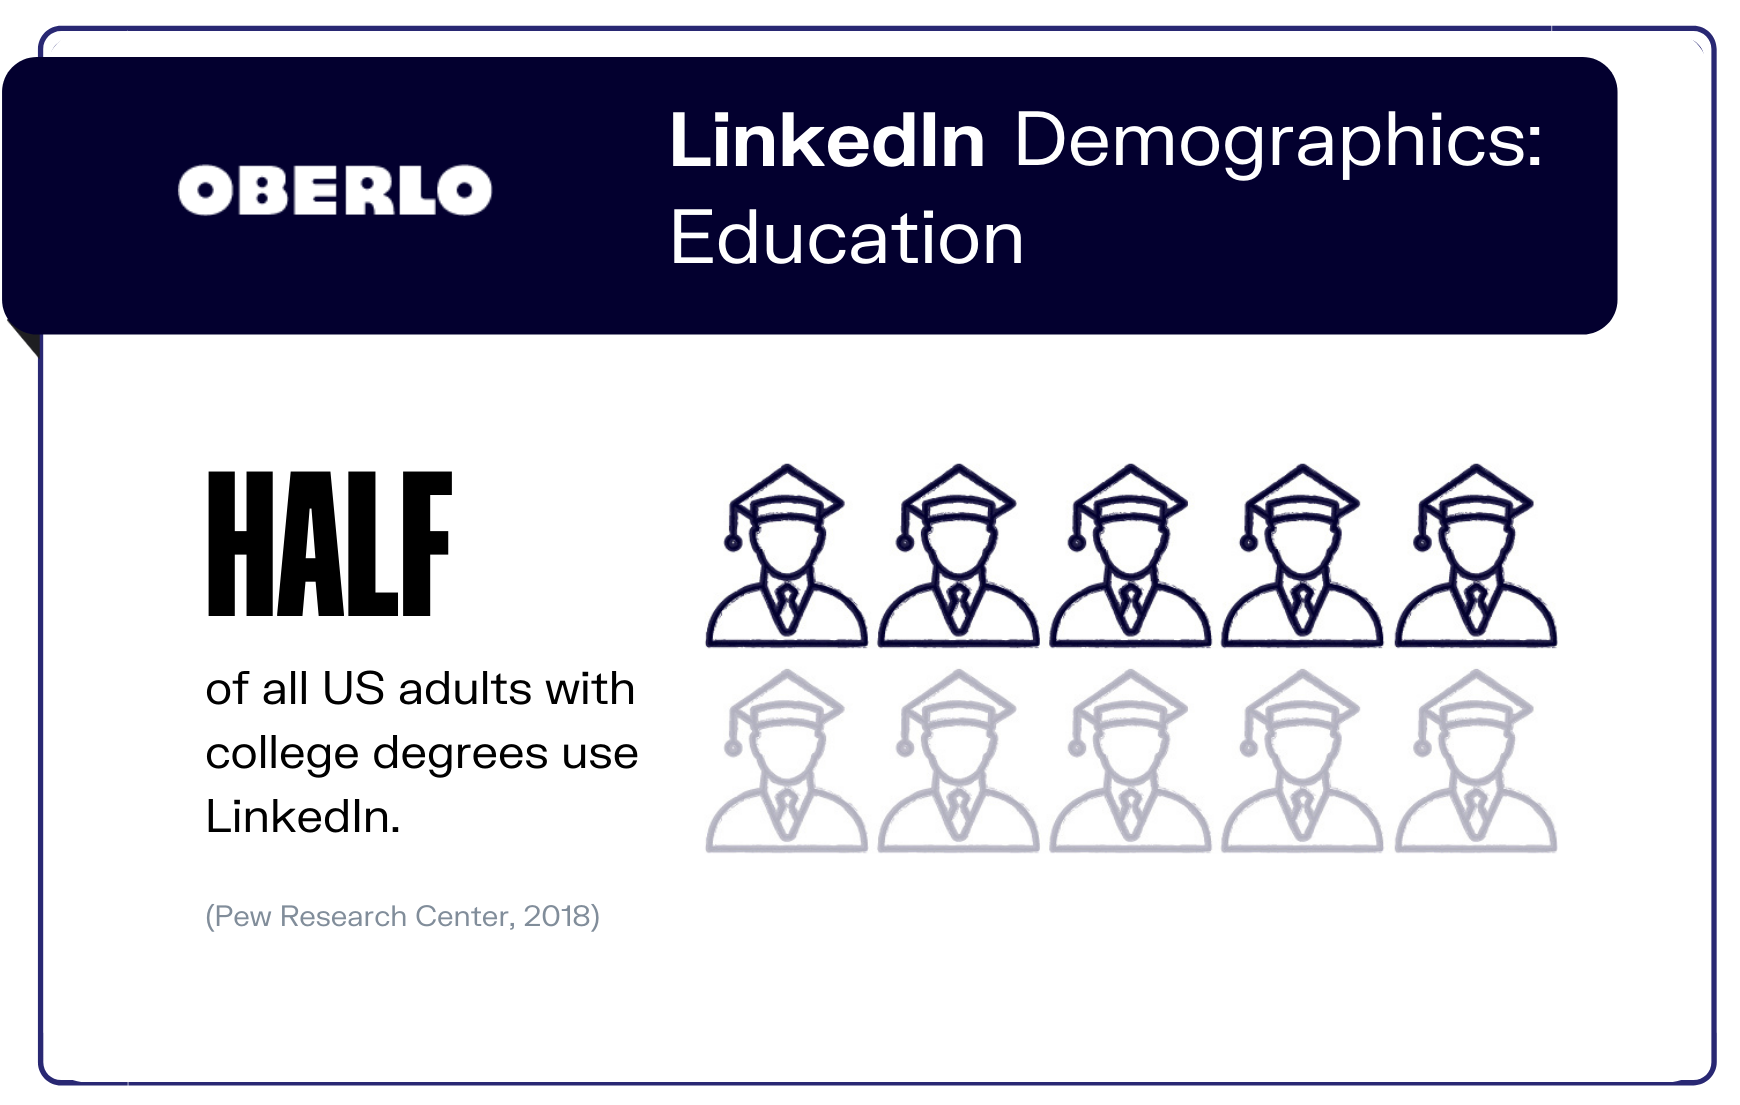 Datos demográficos de LinkedIn: gráfico educativo